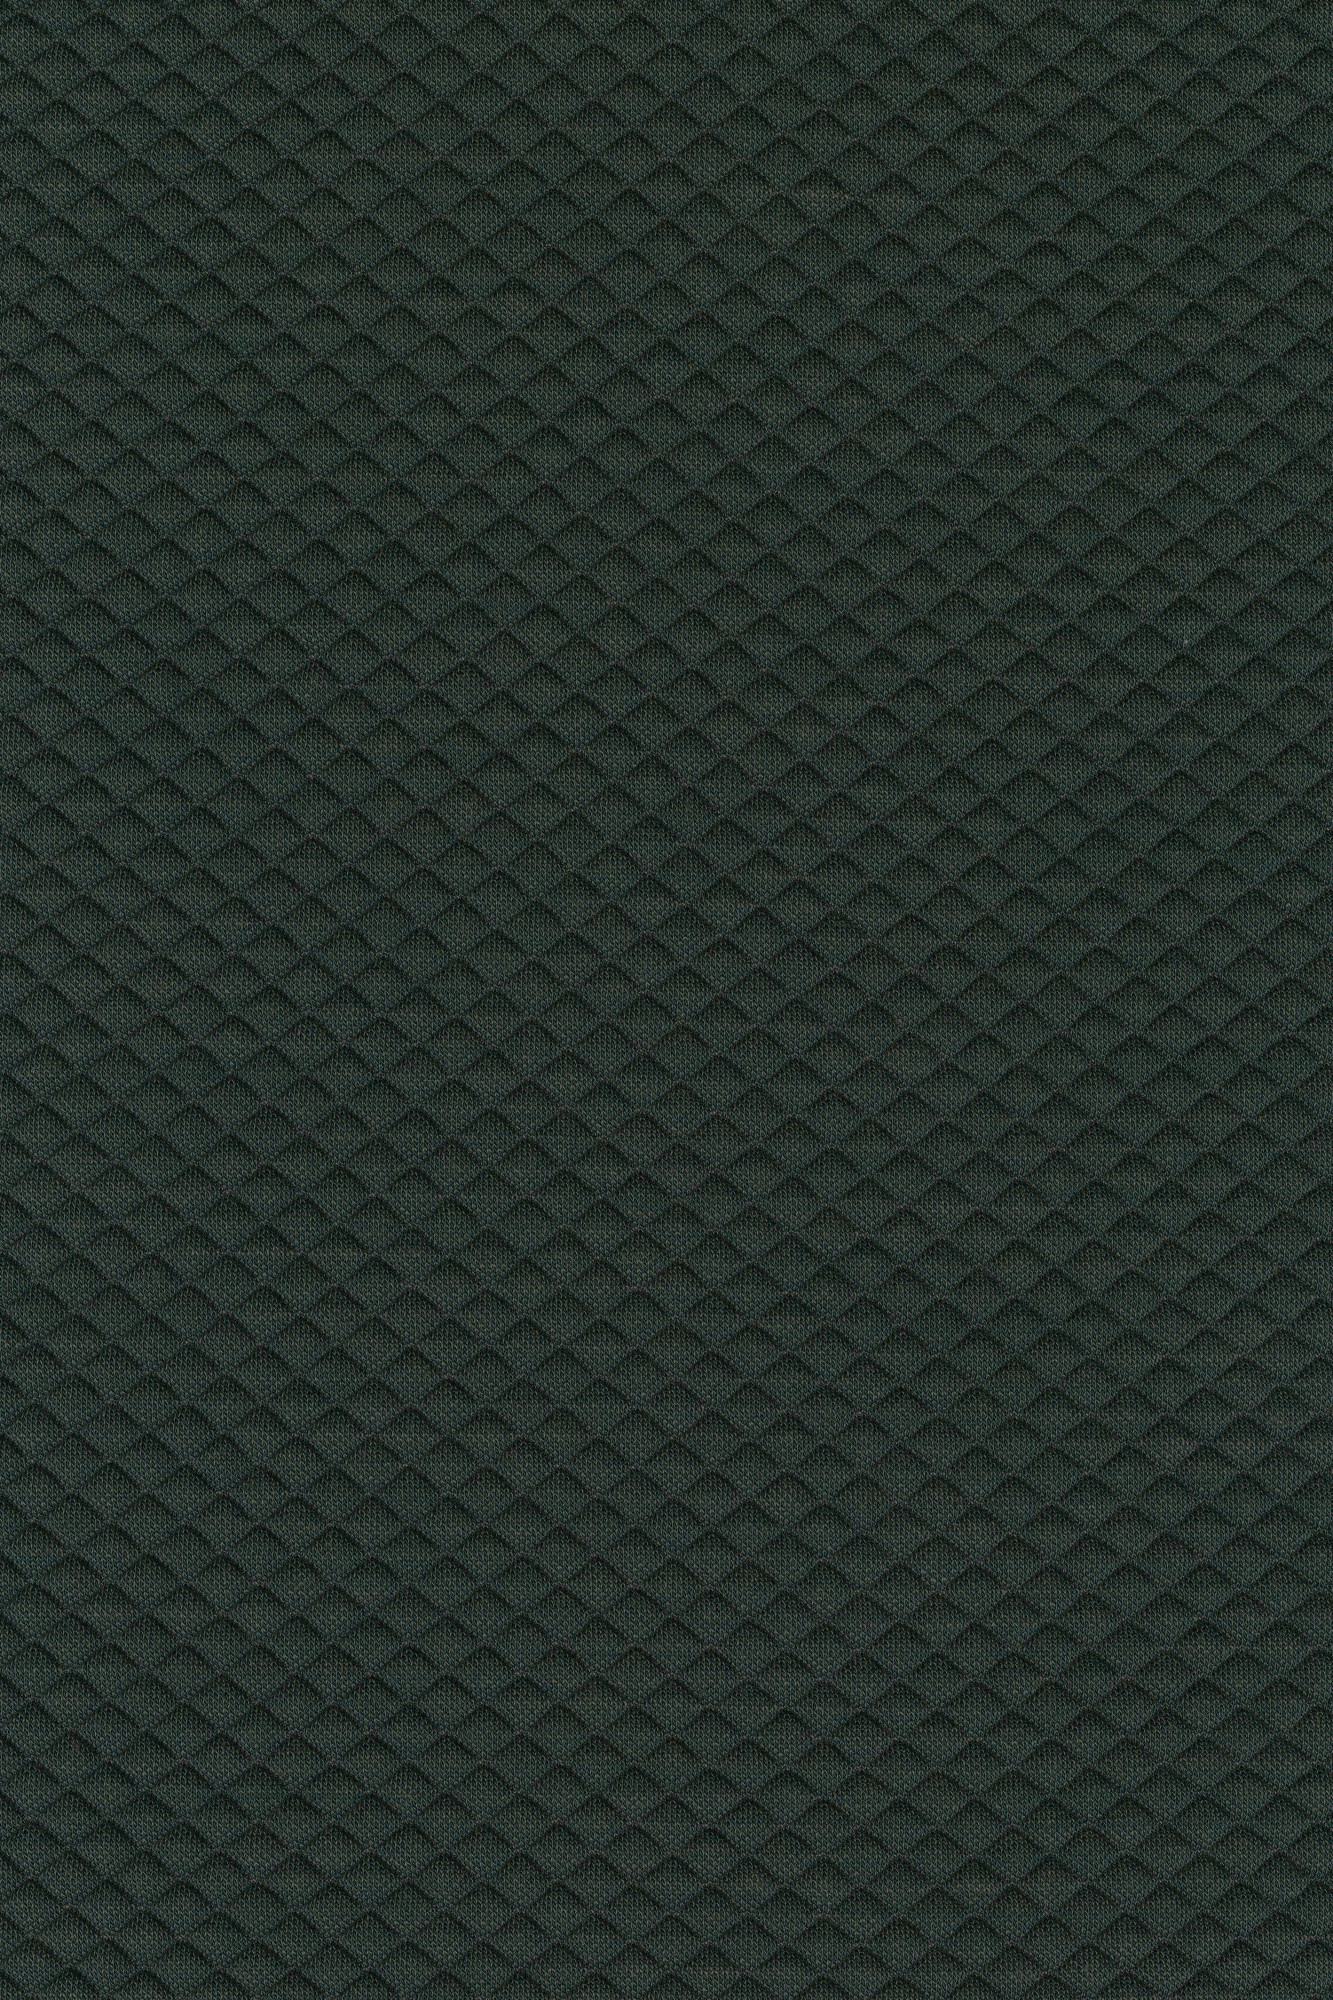 Fabric sample Mosaic 2 0972 green